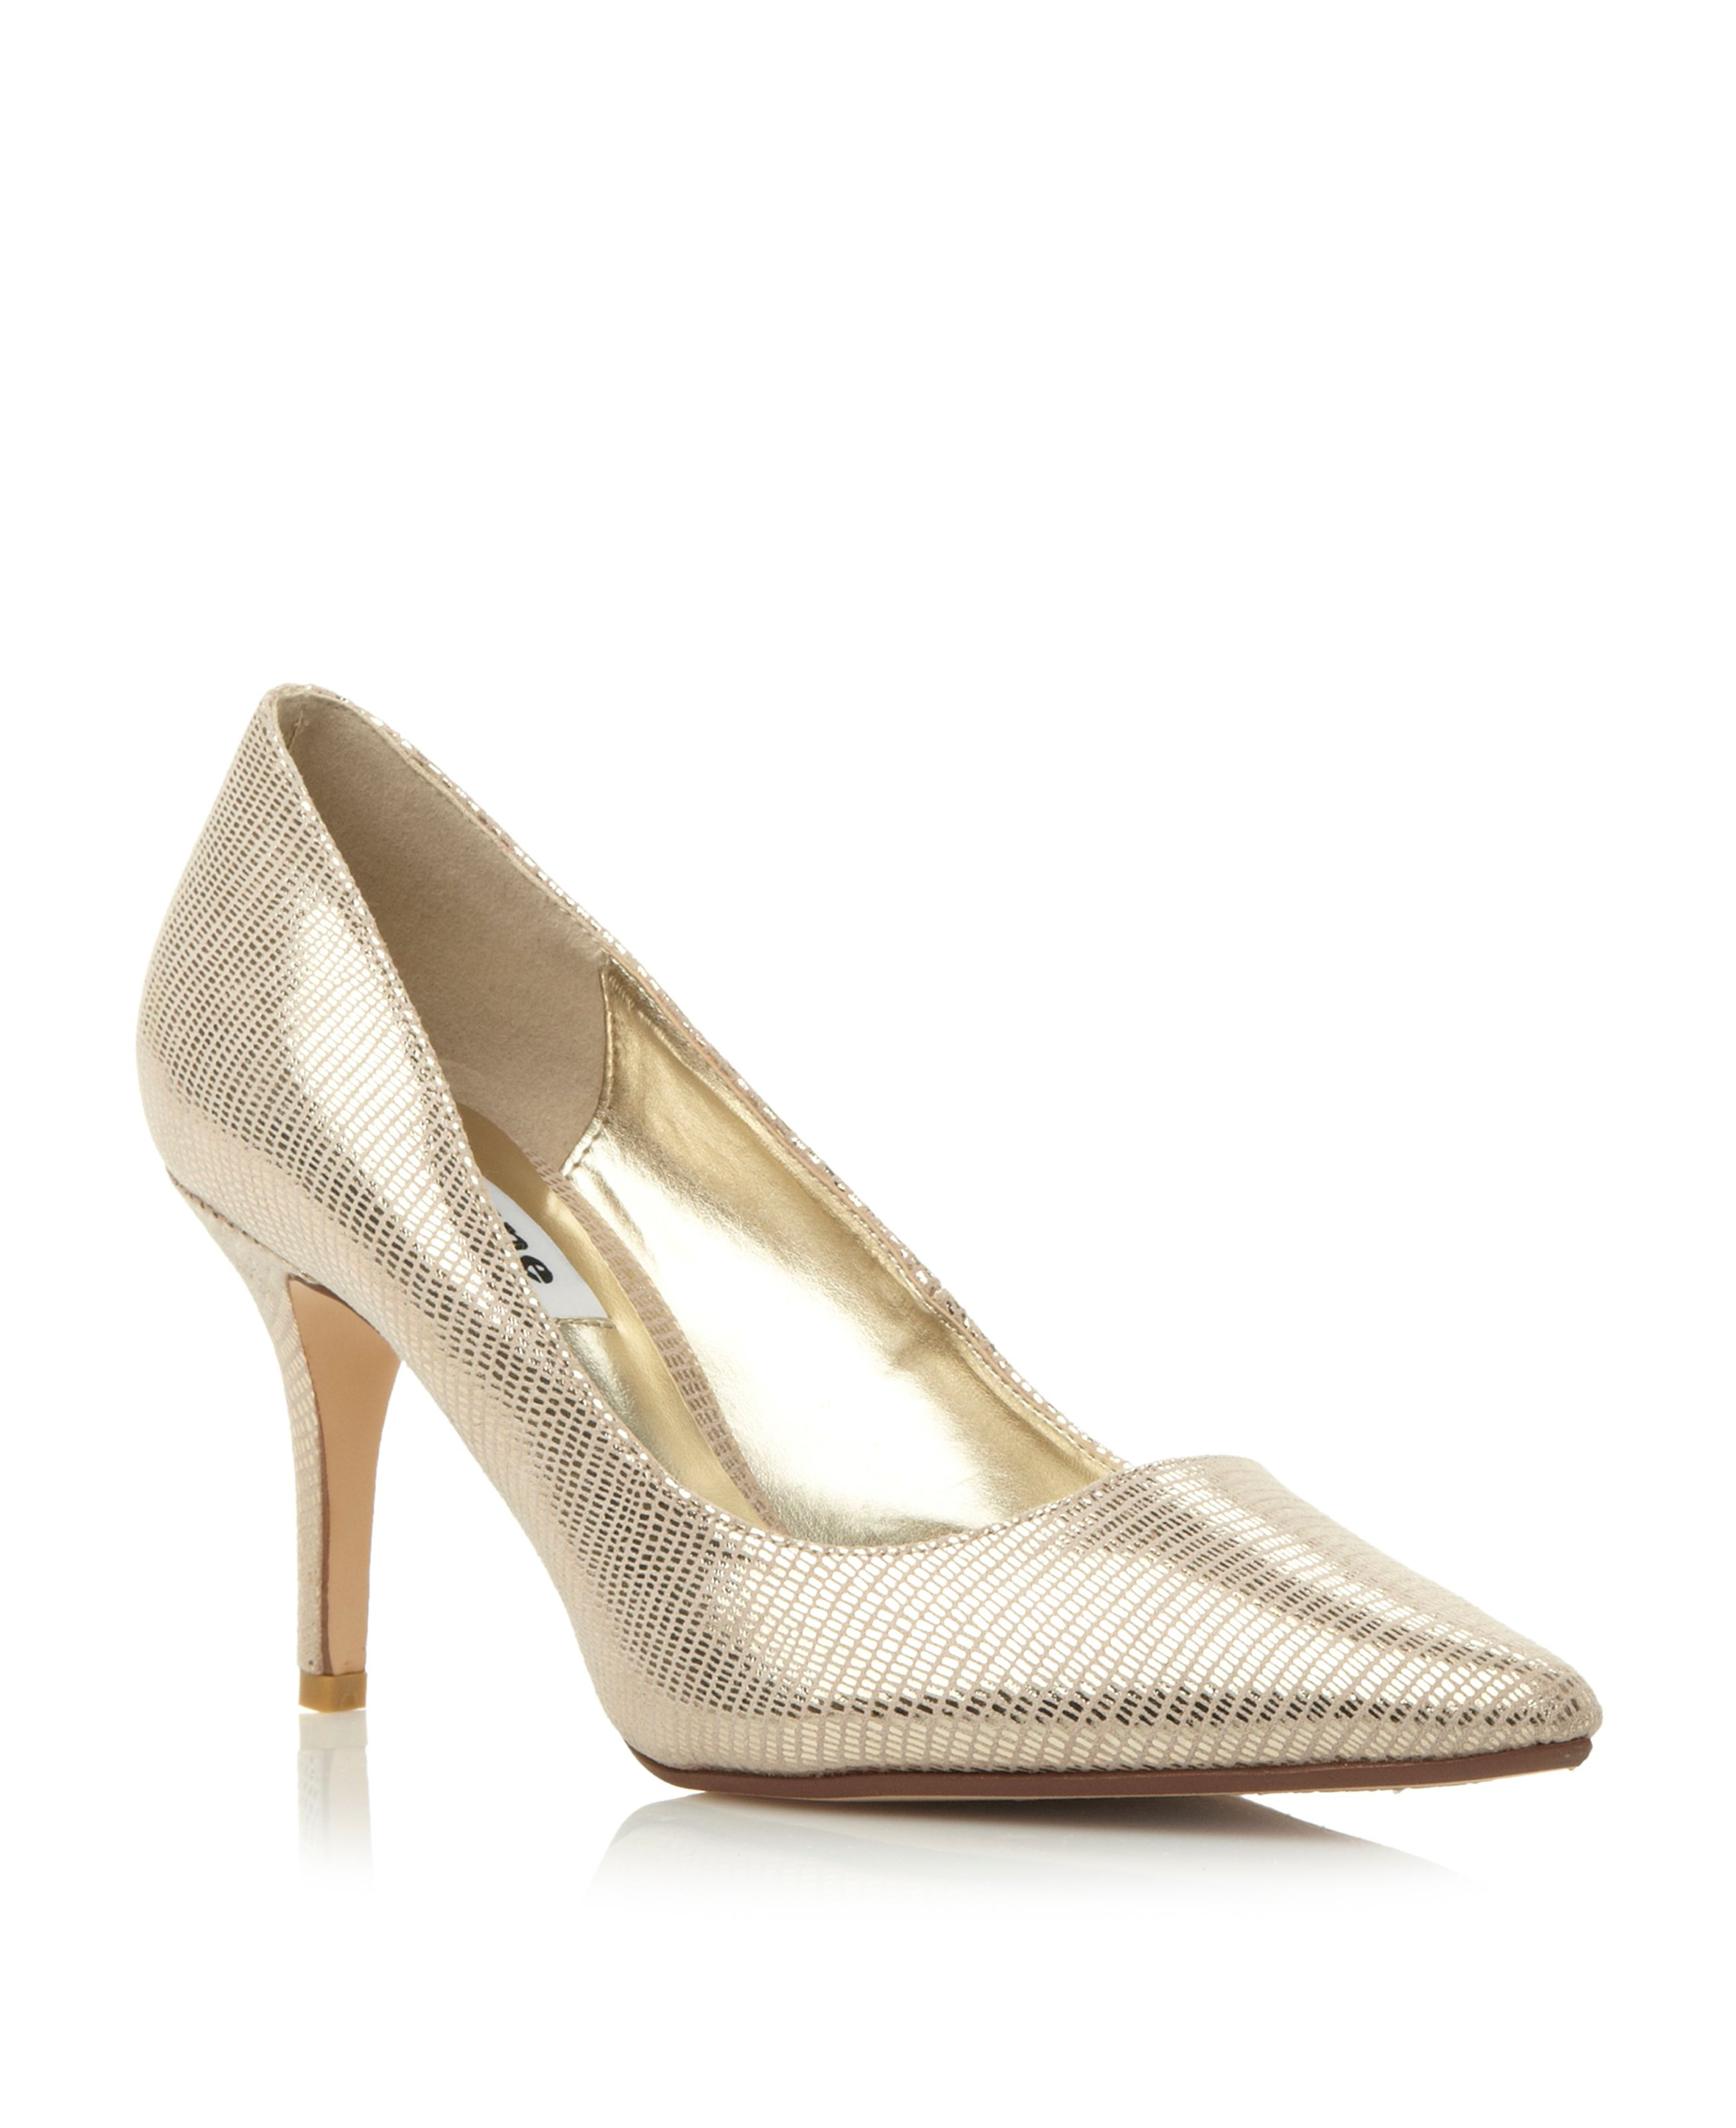 Dune Alina Pointed Mid Heel Court Shoes in Metallic | Lyst